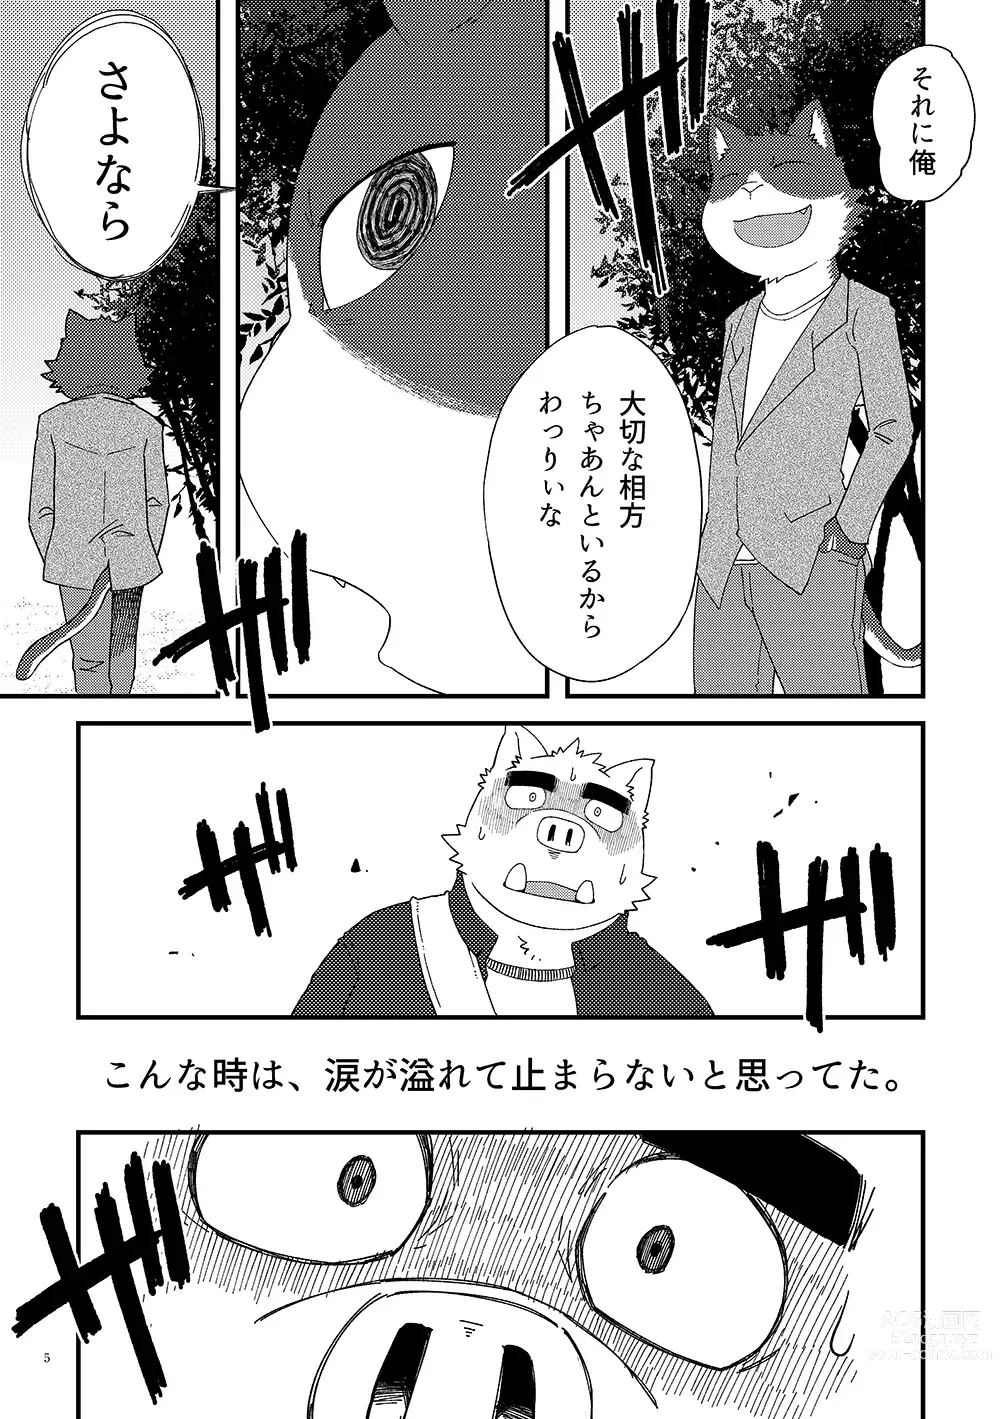 Page 6 of doujinshi Sanbunnoichi Vol 2: Datte sukidakara.